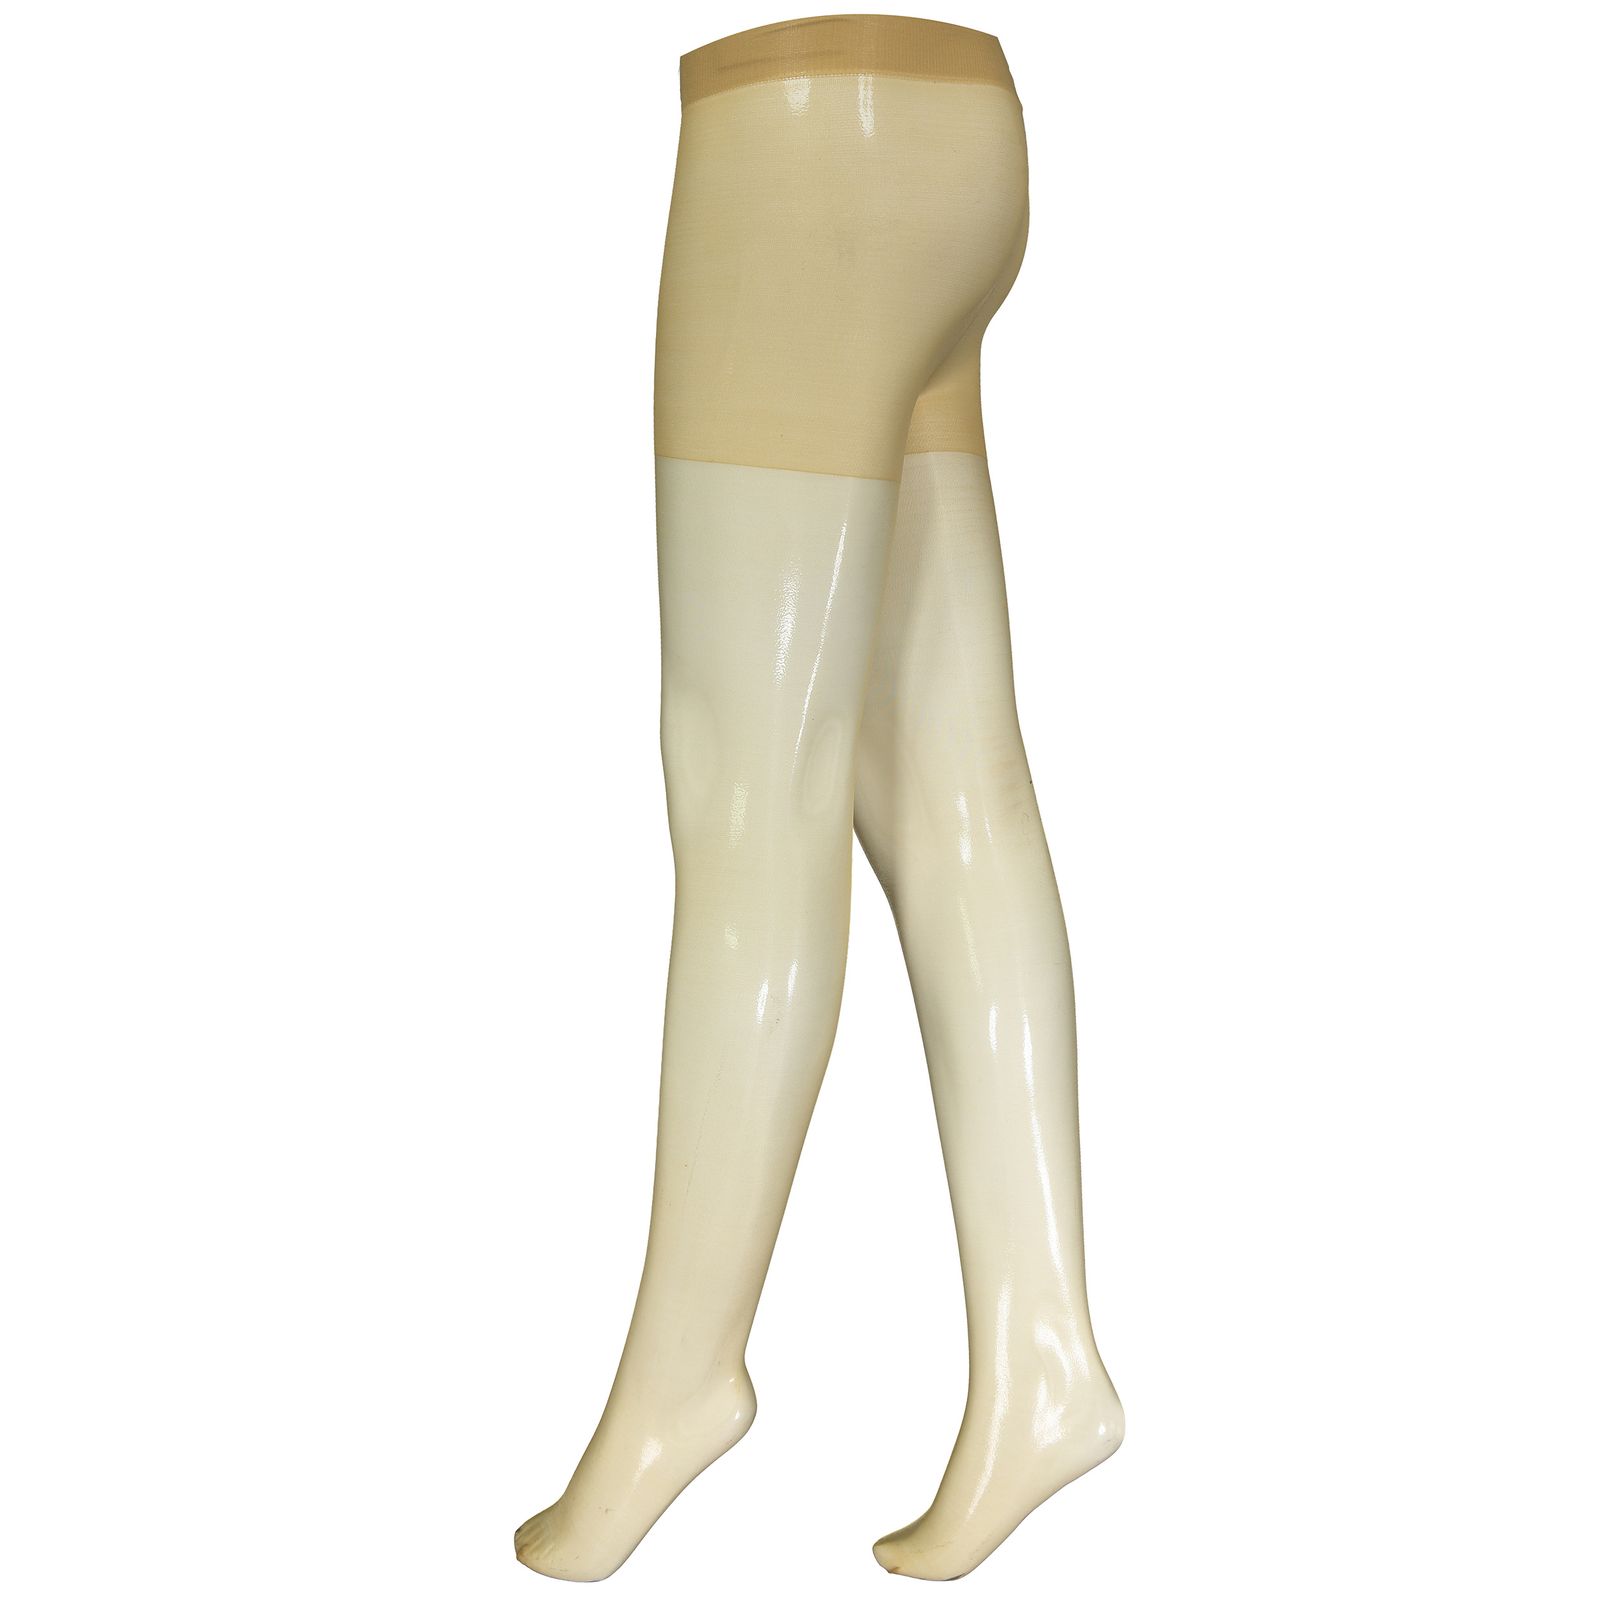 جوراب شلواری زنانه شیشه ای کد L8003-skin -  - 1